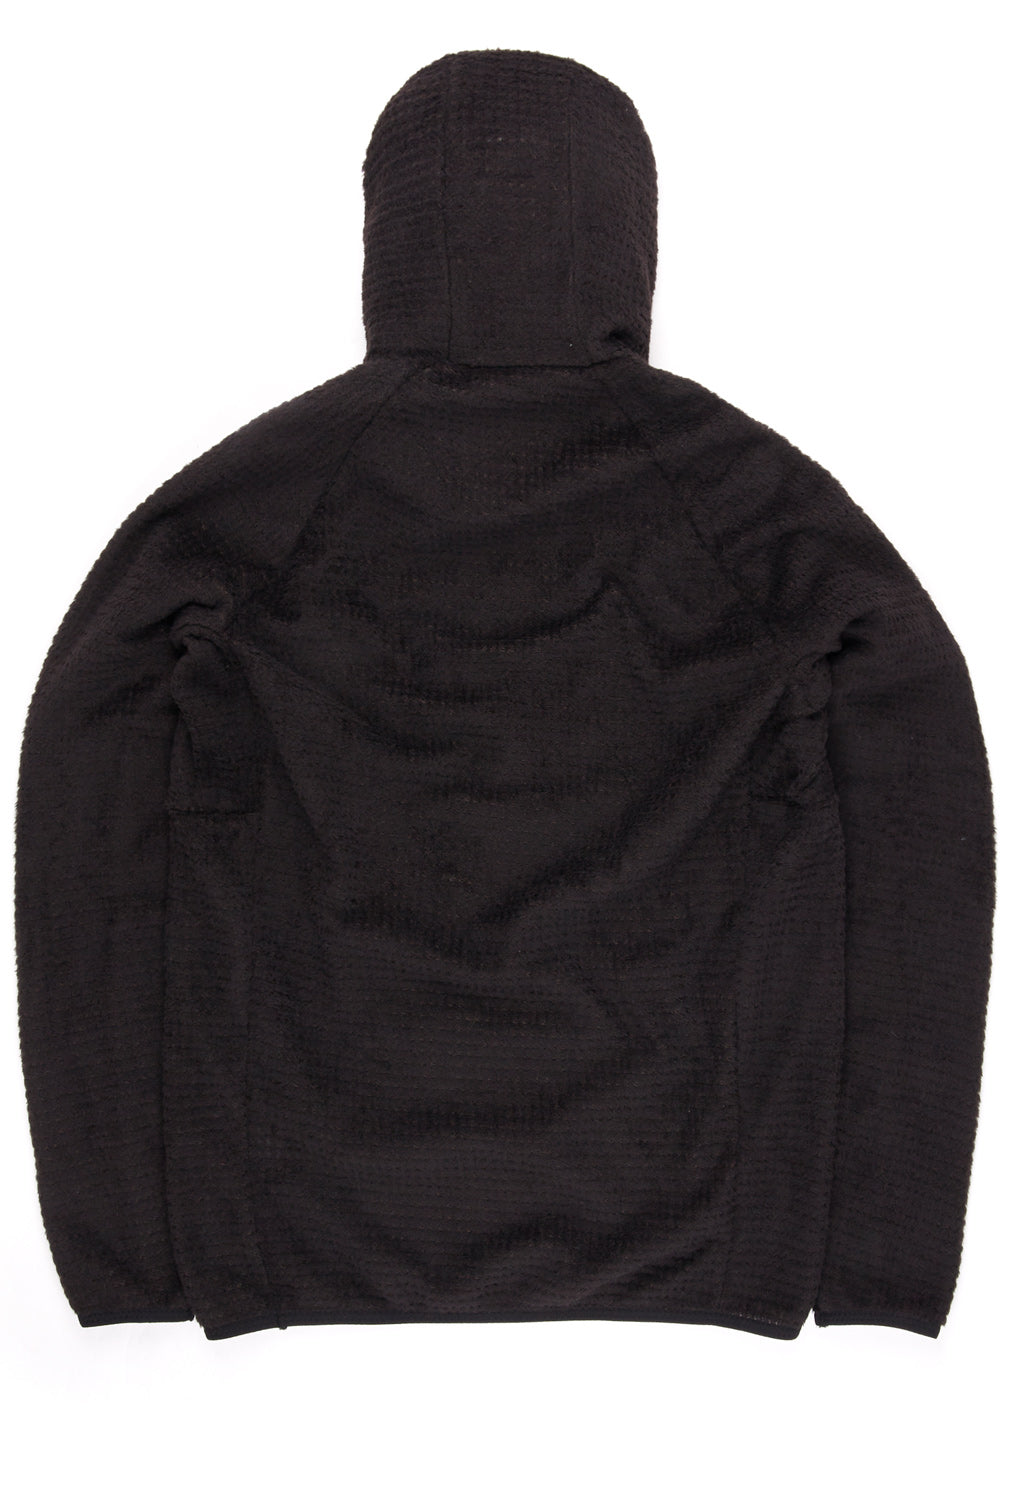 Senchi Designs Alpha 120 Hoodie with Zip and Pocket - Black